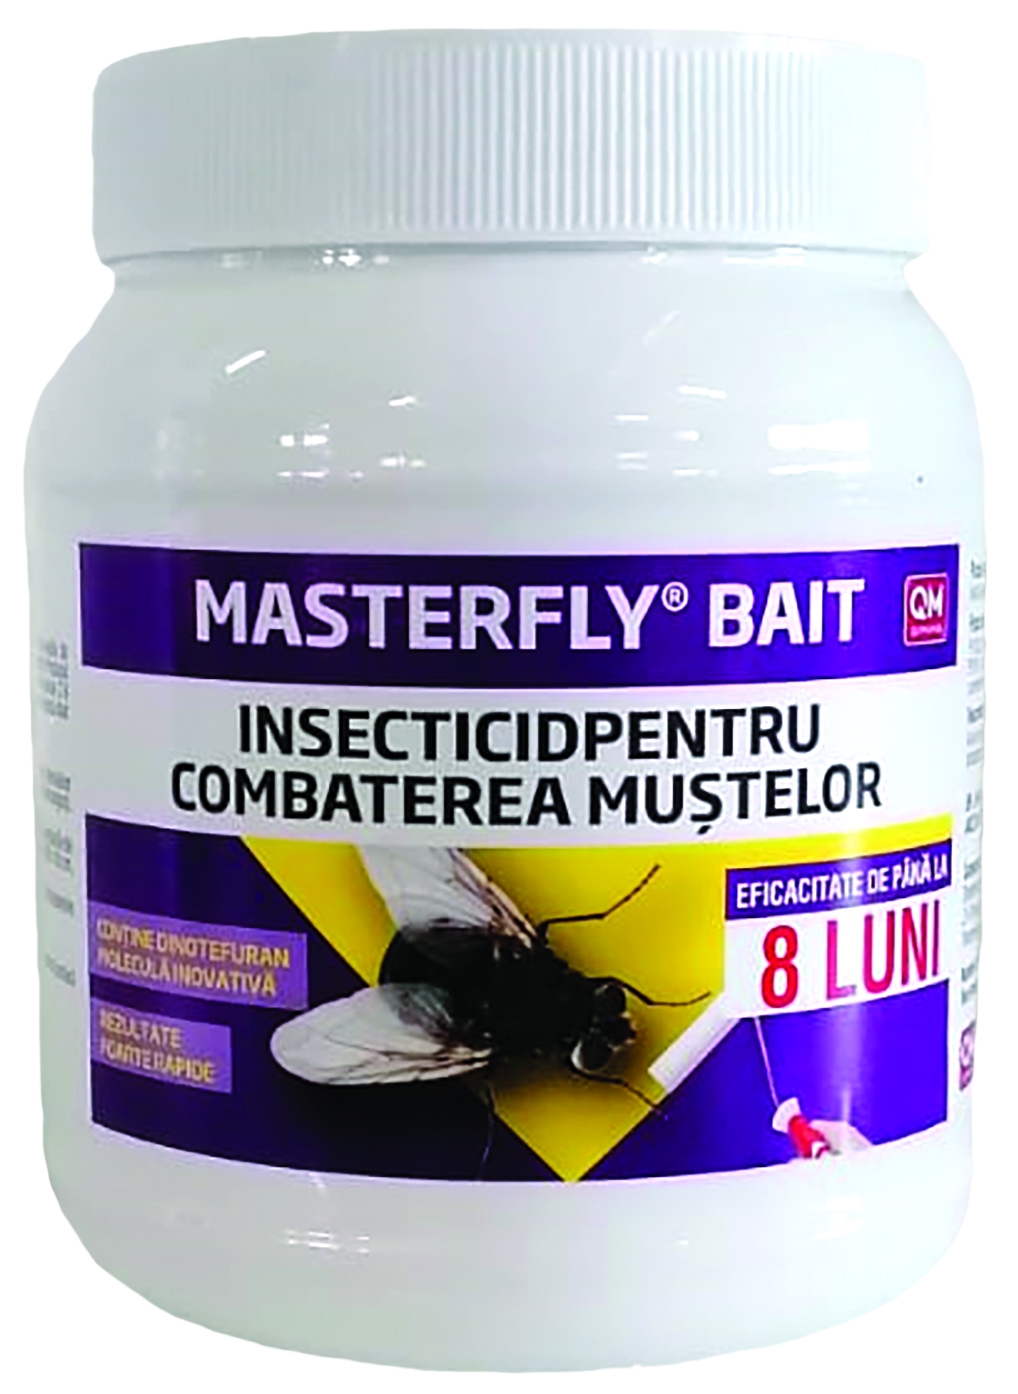 Masterfly Bait 125 g, insecticid pentru combaterea mustelor petmart.ro